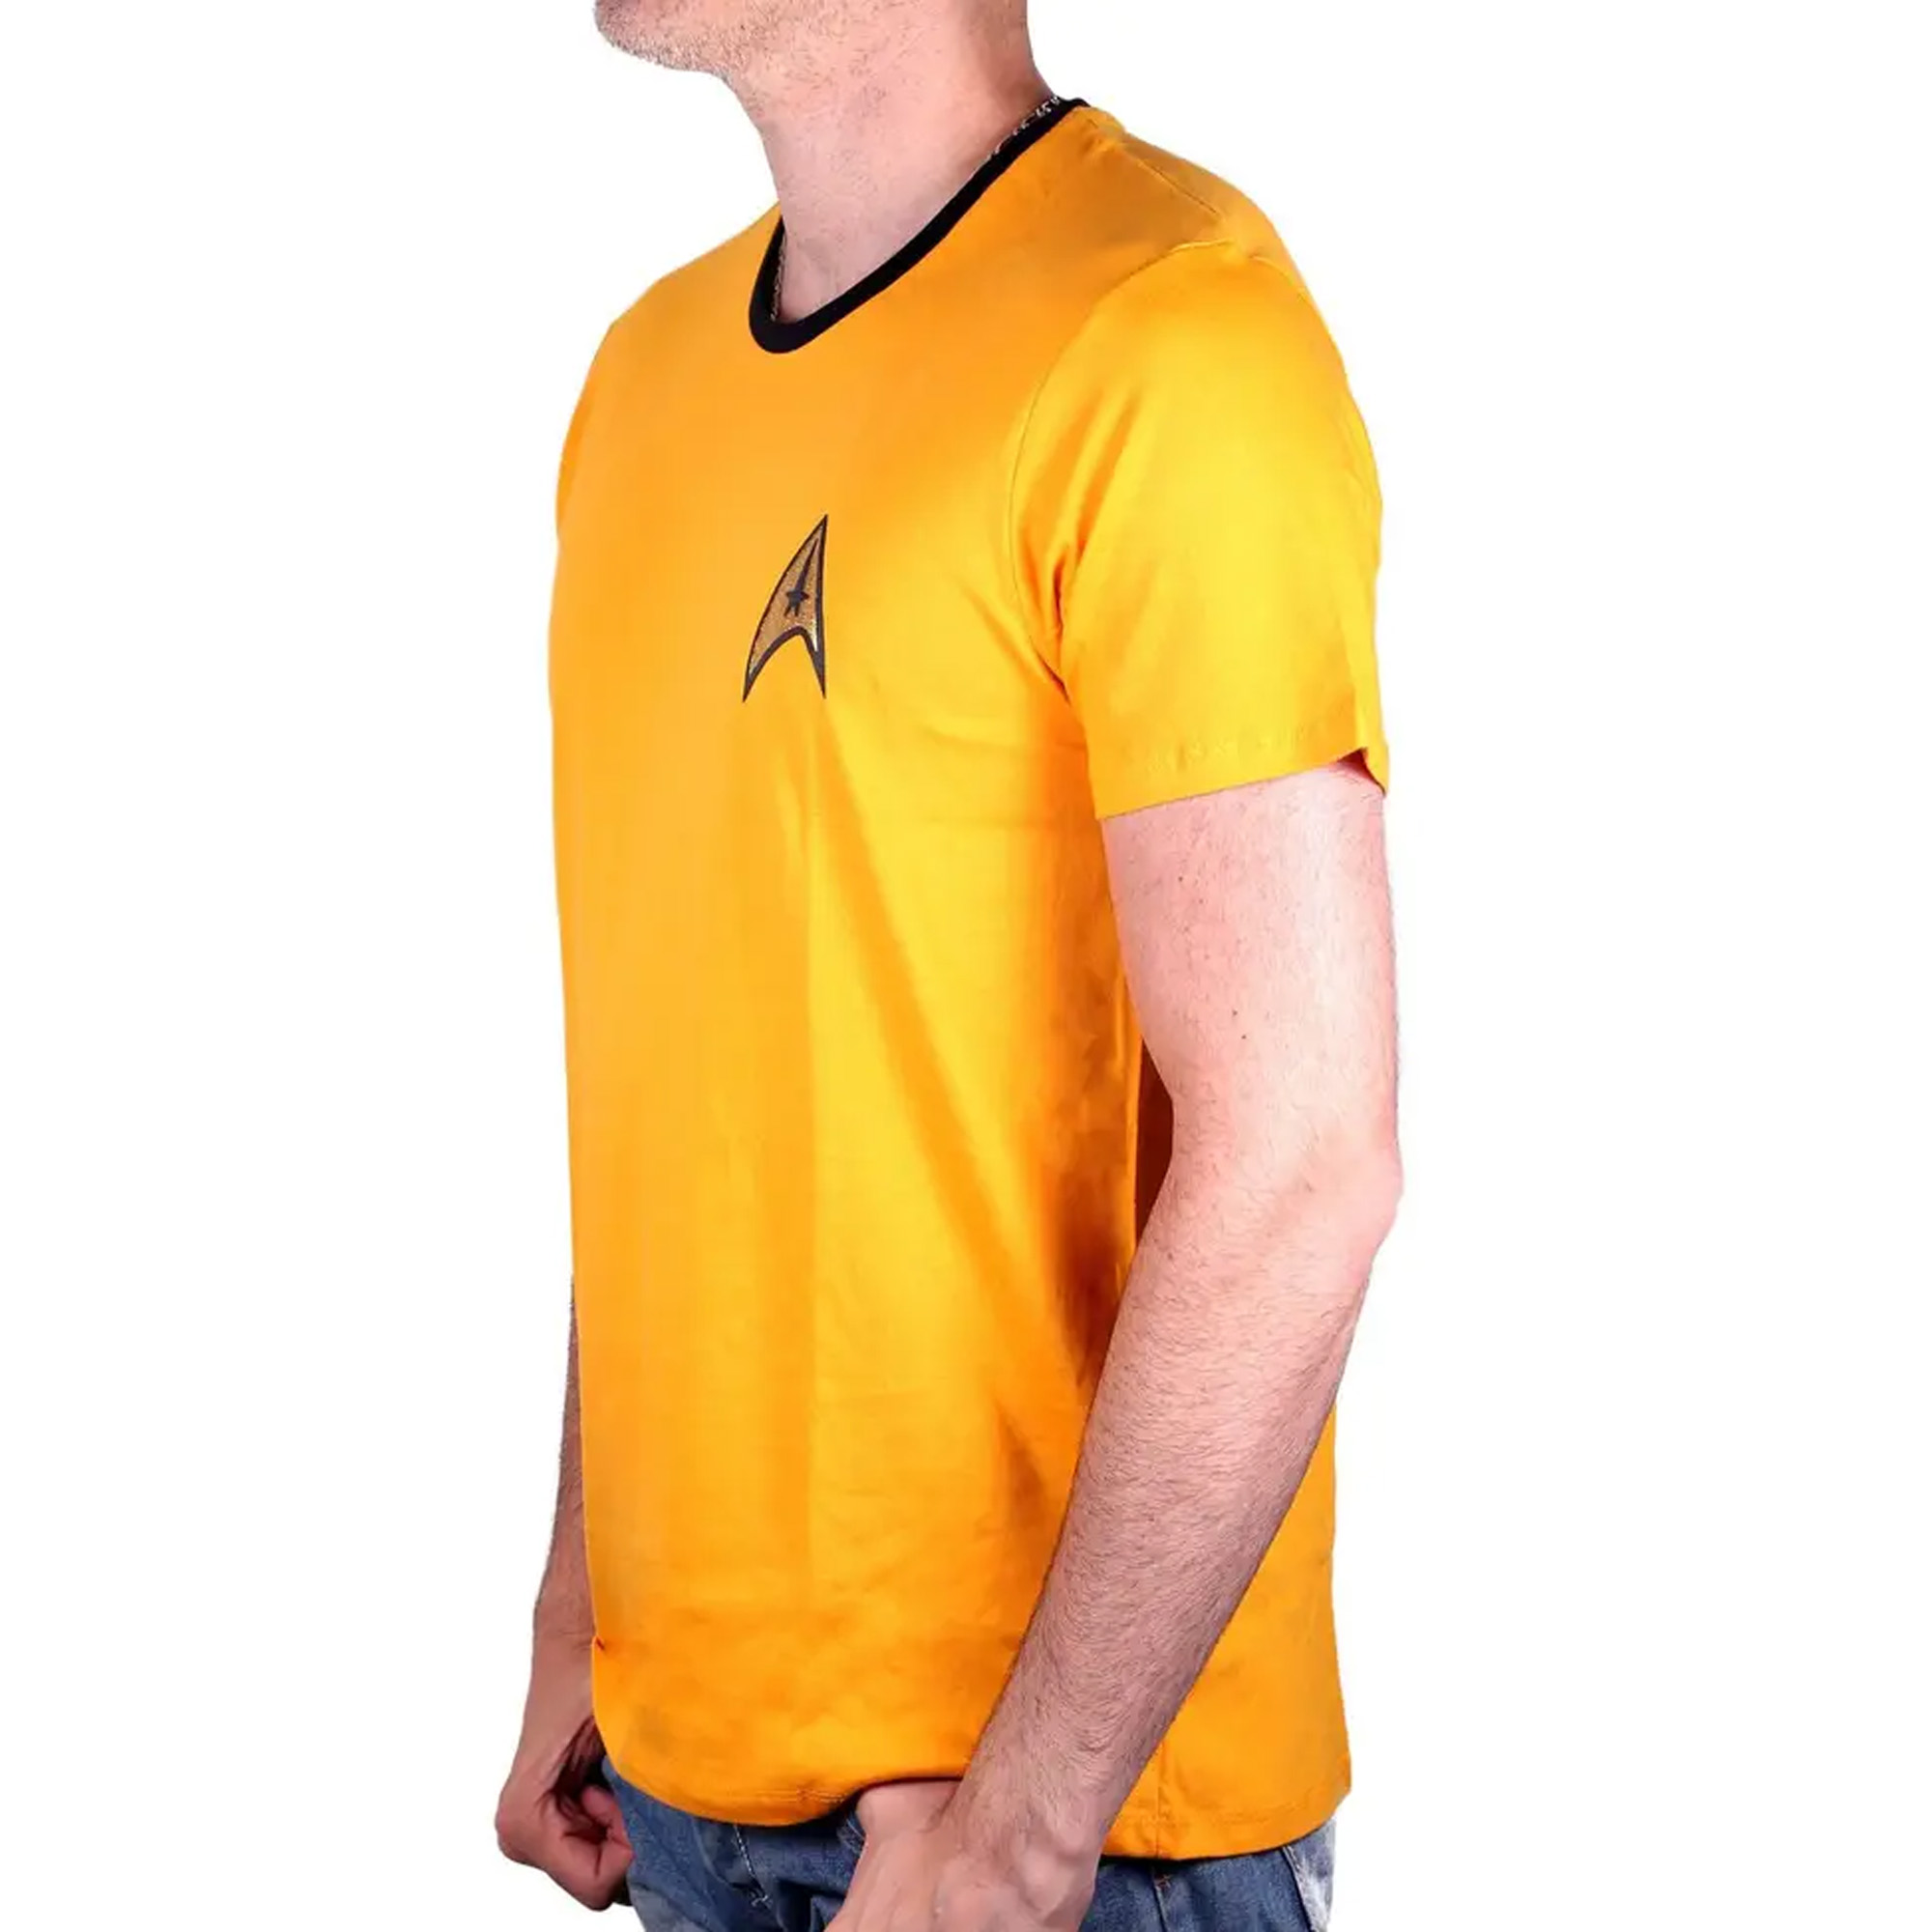 Kirk Uniform T-Shirt gelb - Star Trek